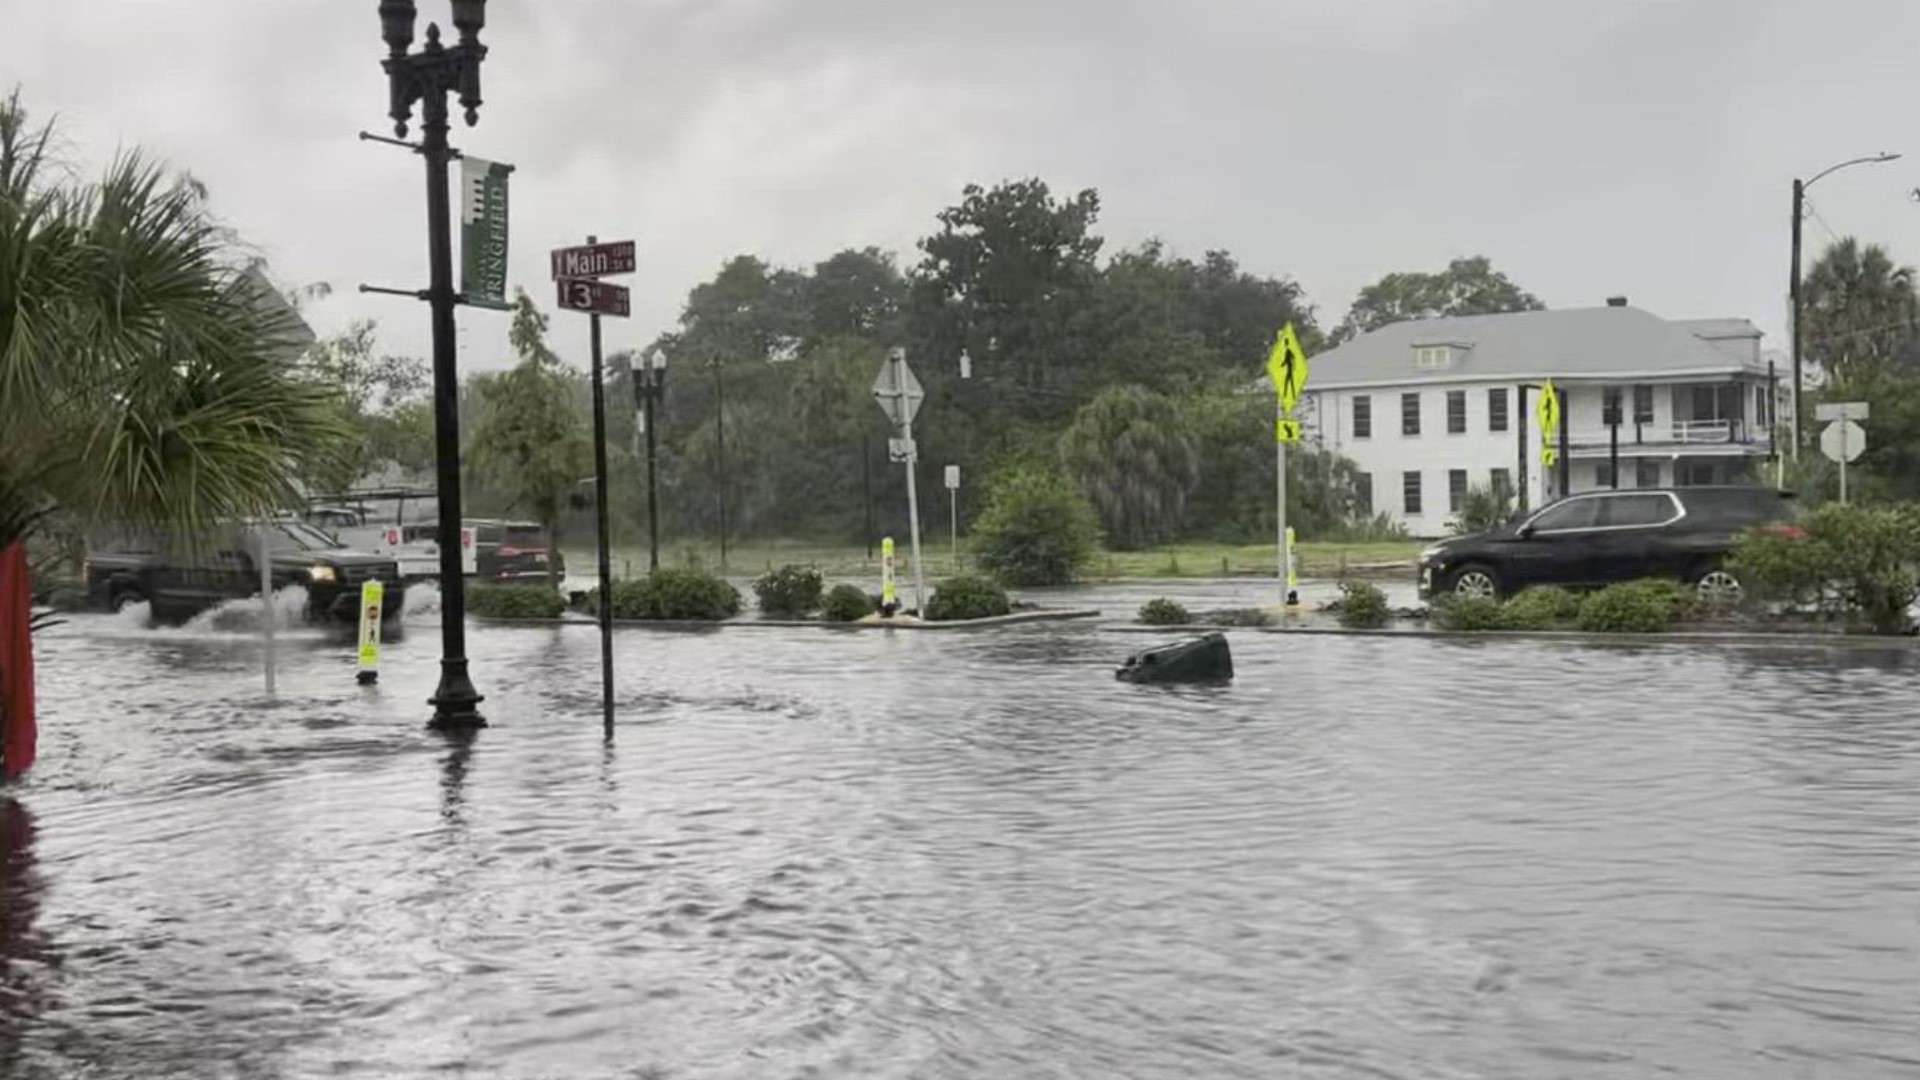 Video captured flooding on Main Street.